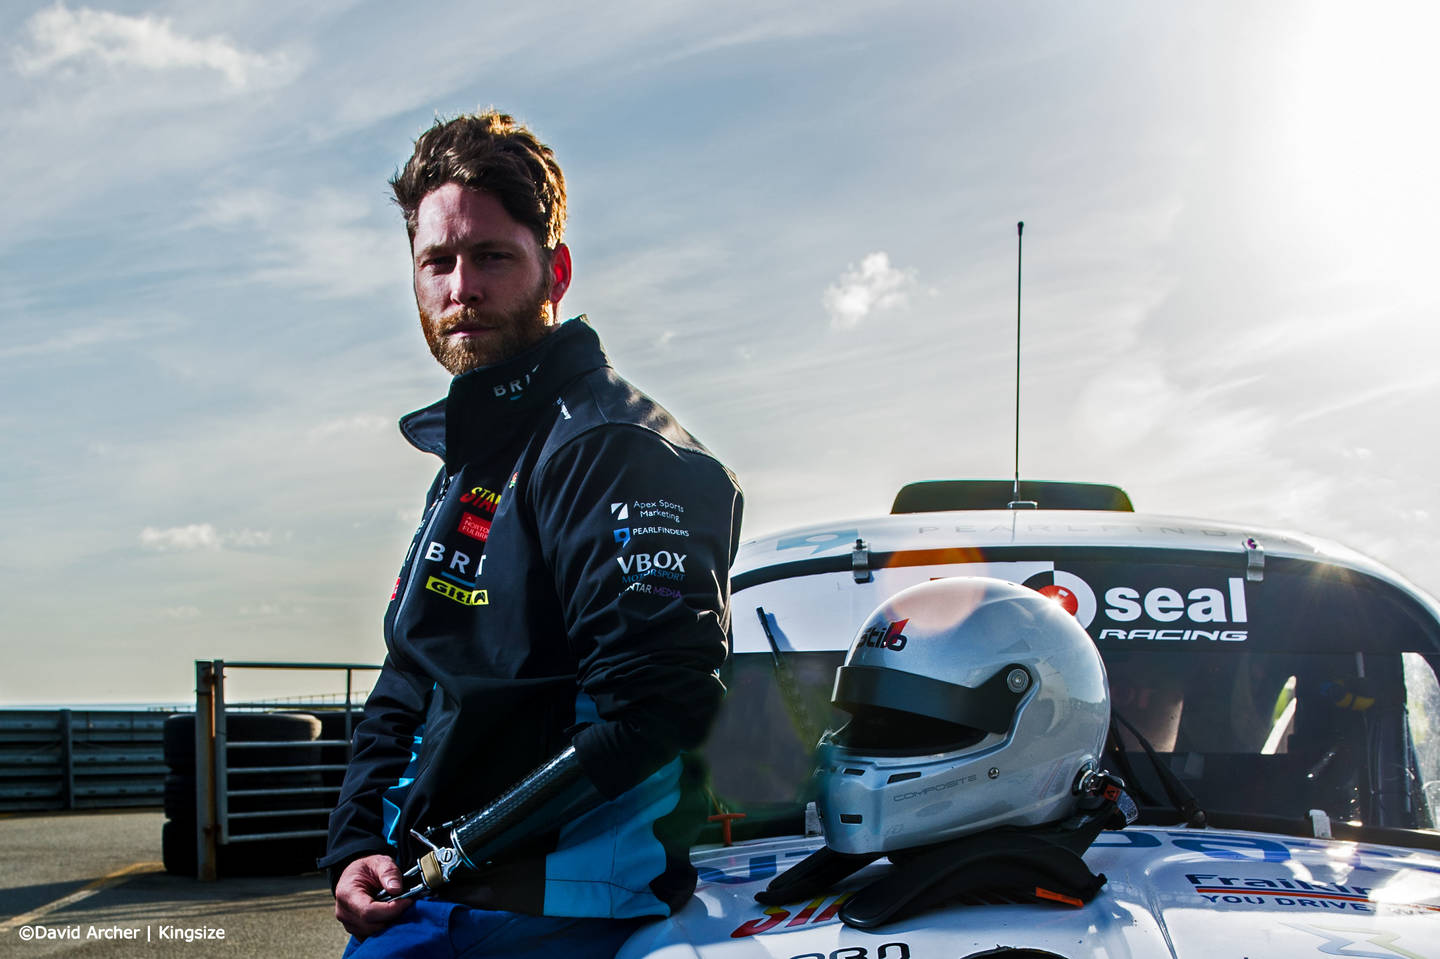 Jon-Allan Butterworth standing in front of Team BRIT racing car